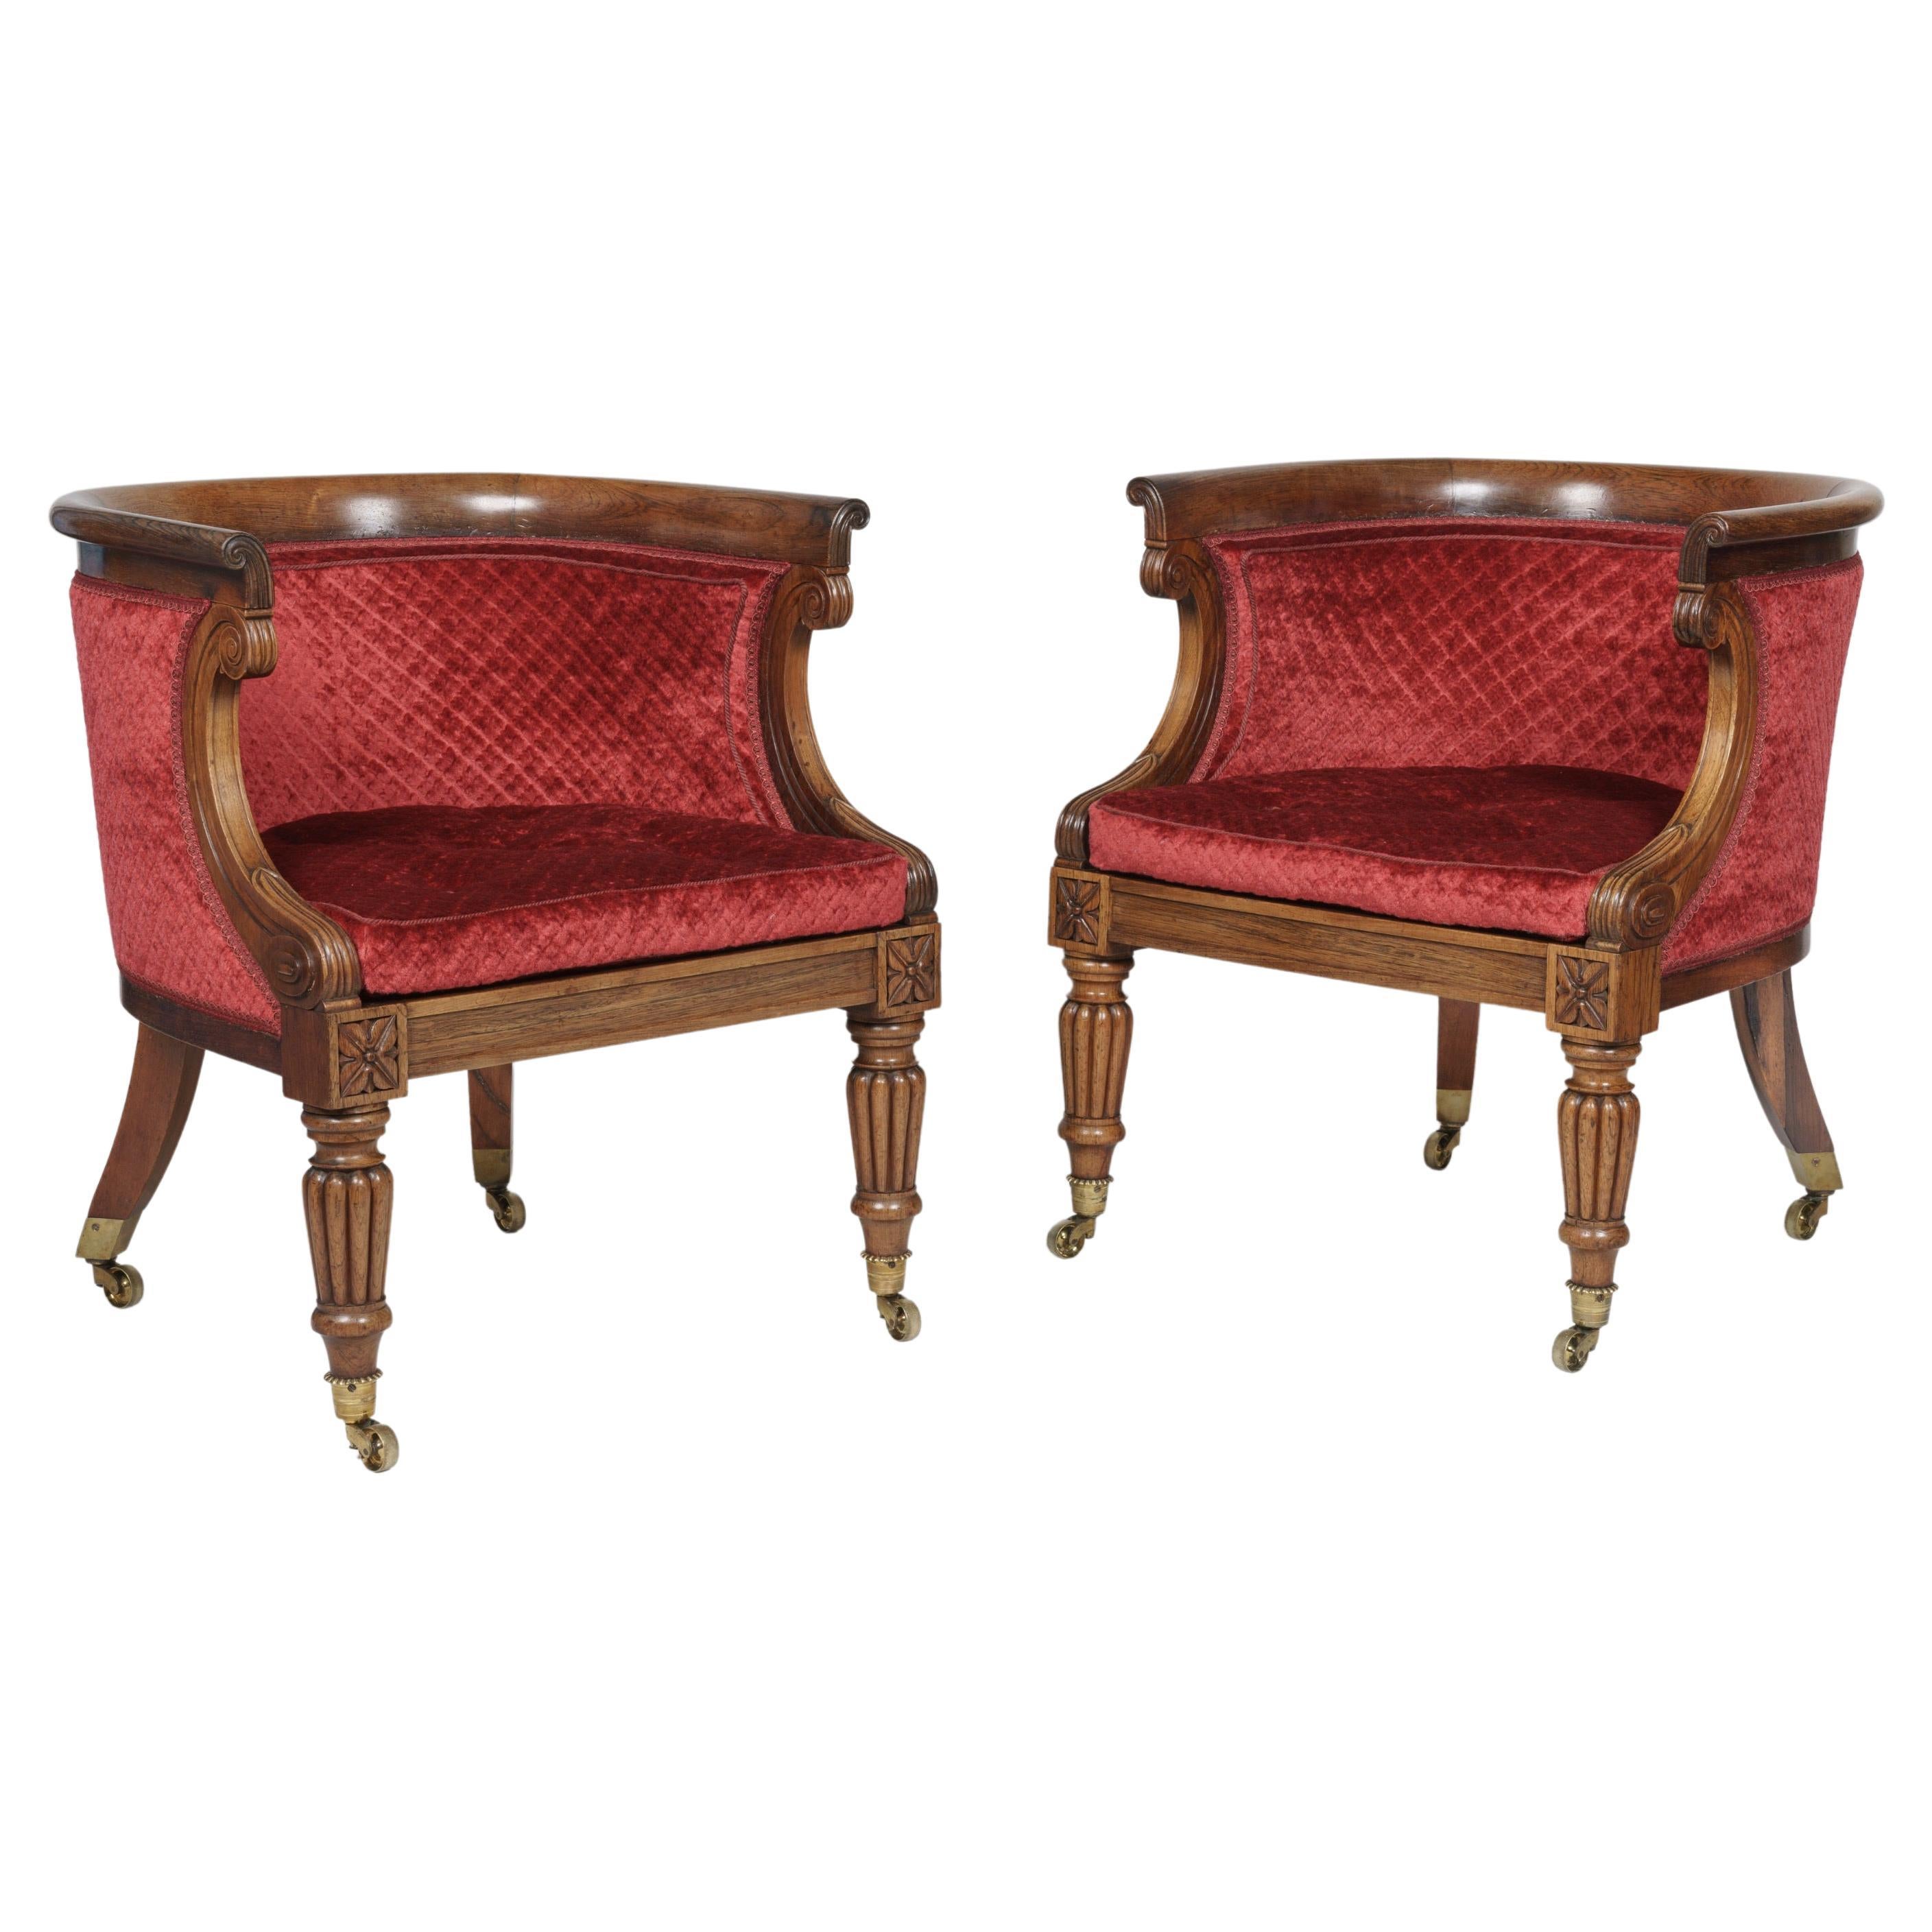 Sessel mit roter Polsterung aus der Regency-Periode, Paar